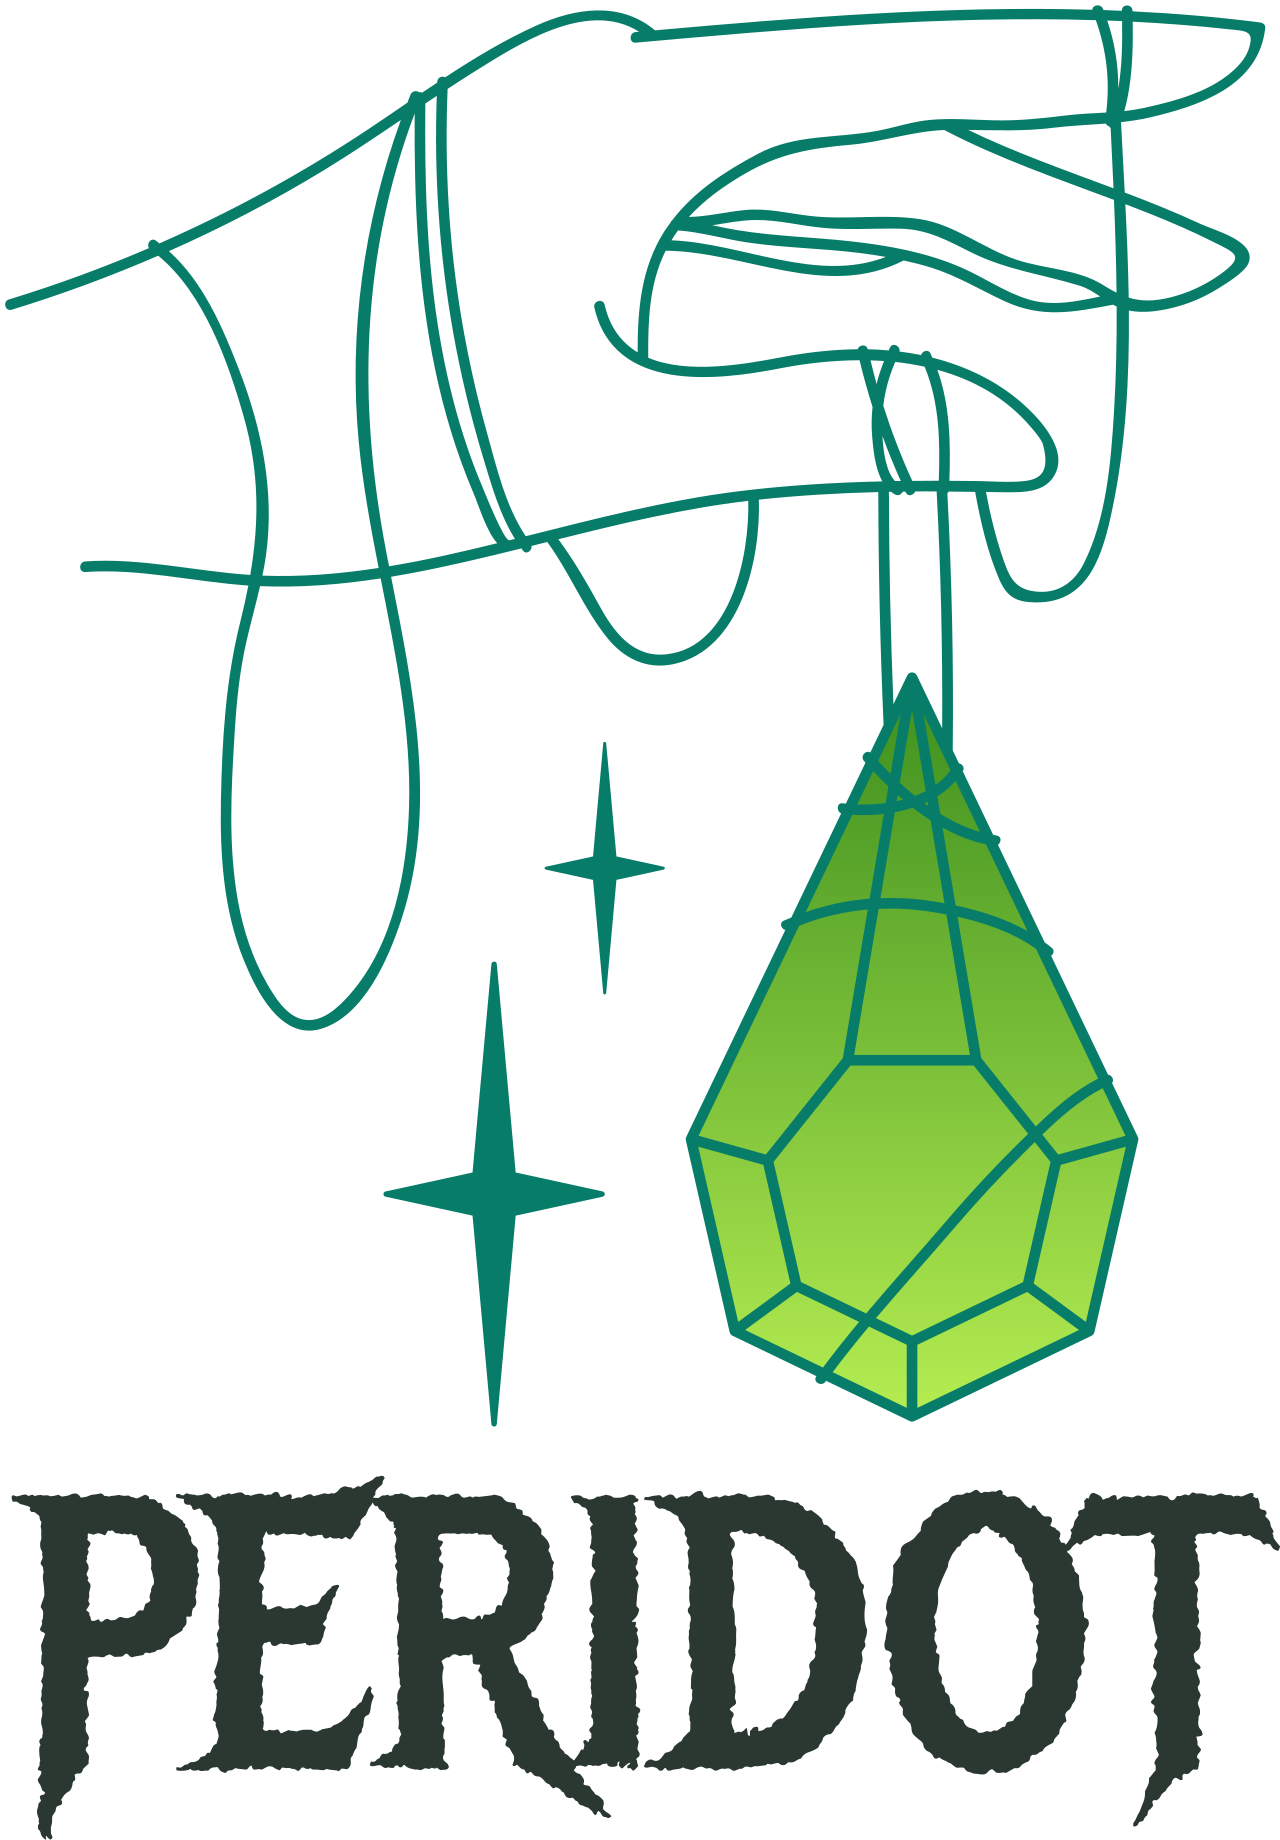 PERIDOT's logo